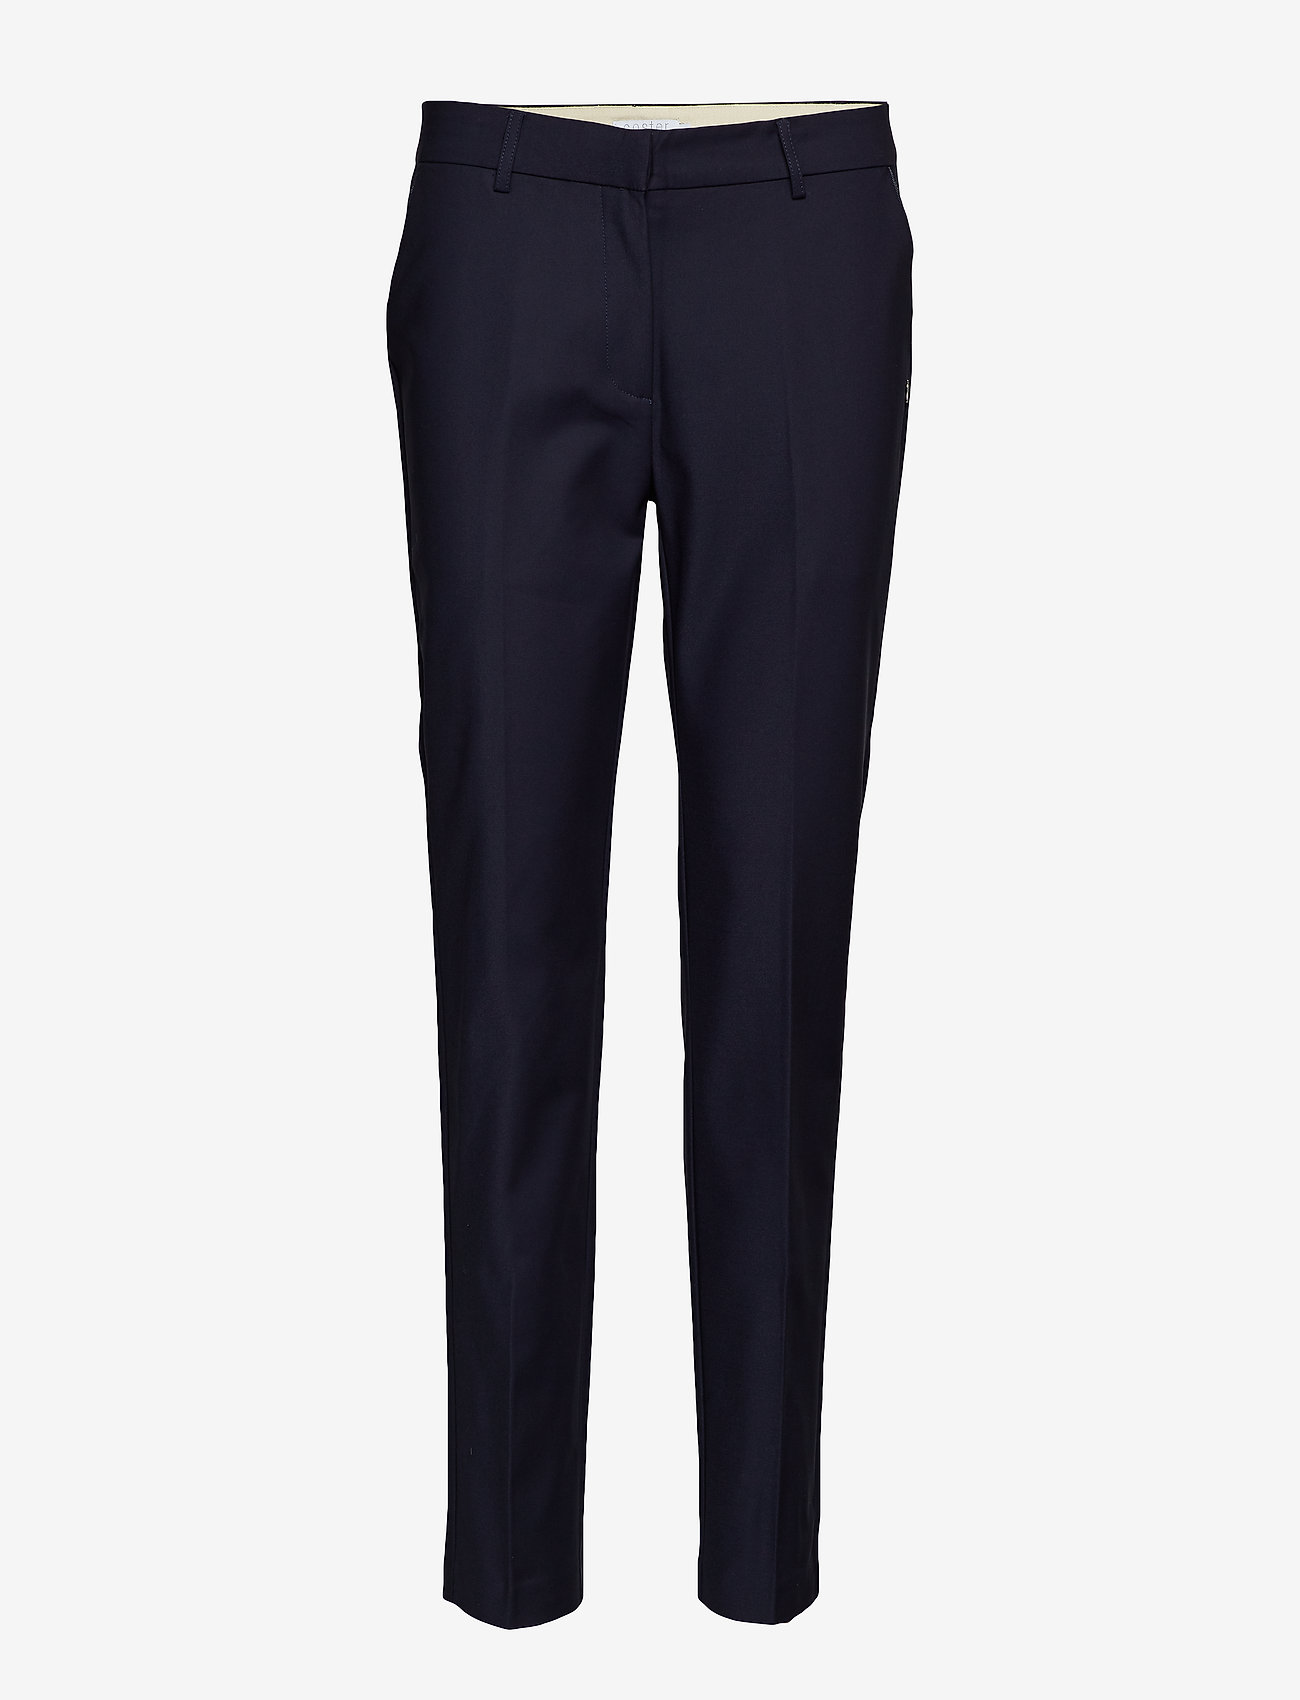 Coster Copenhagen - Pants w. crease - Lucia - slim fit trousers - night sky blue - 0